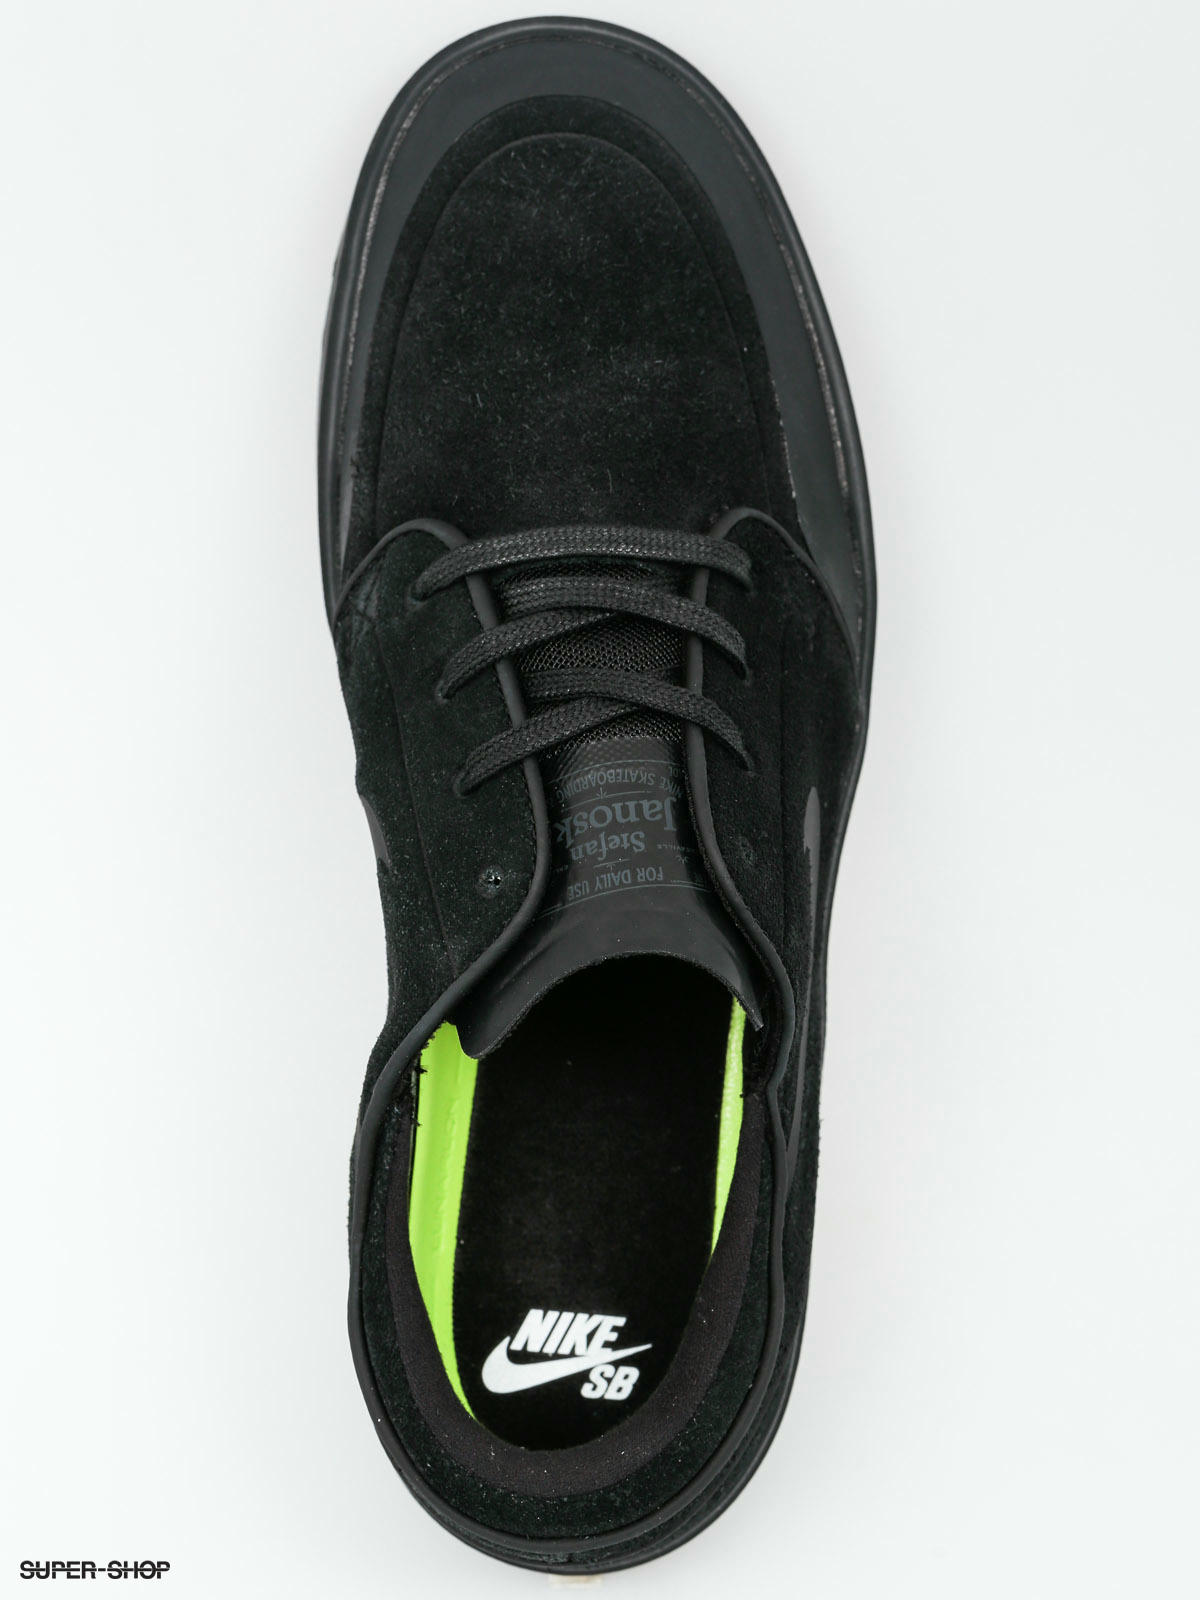 Veronderstelling Allergisch hoesten Nike SB Shoes Stefan Janoski Hyperfeel Xt (black/black anthracite white)